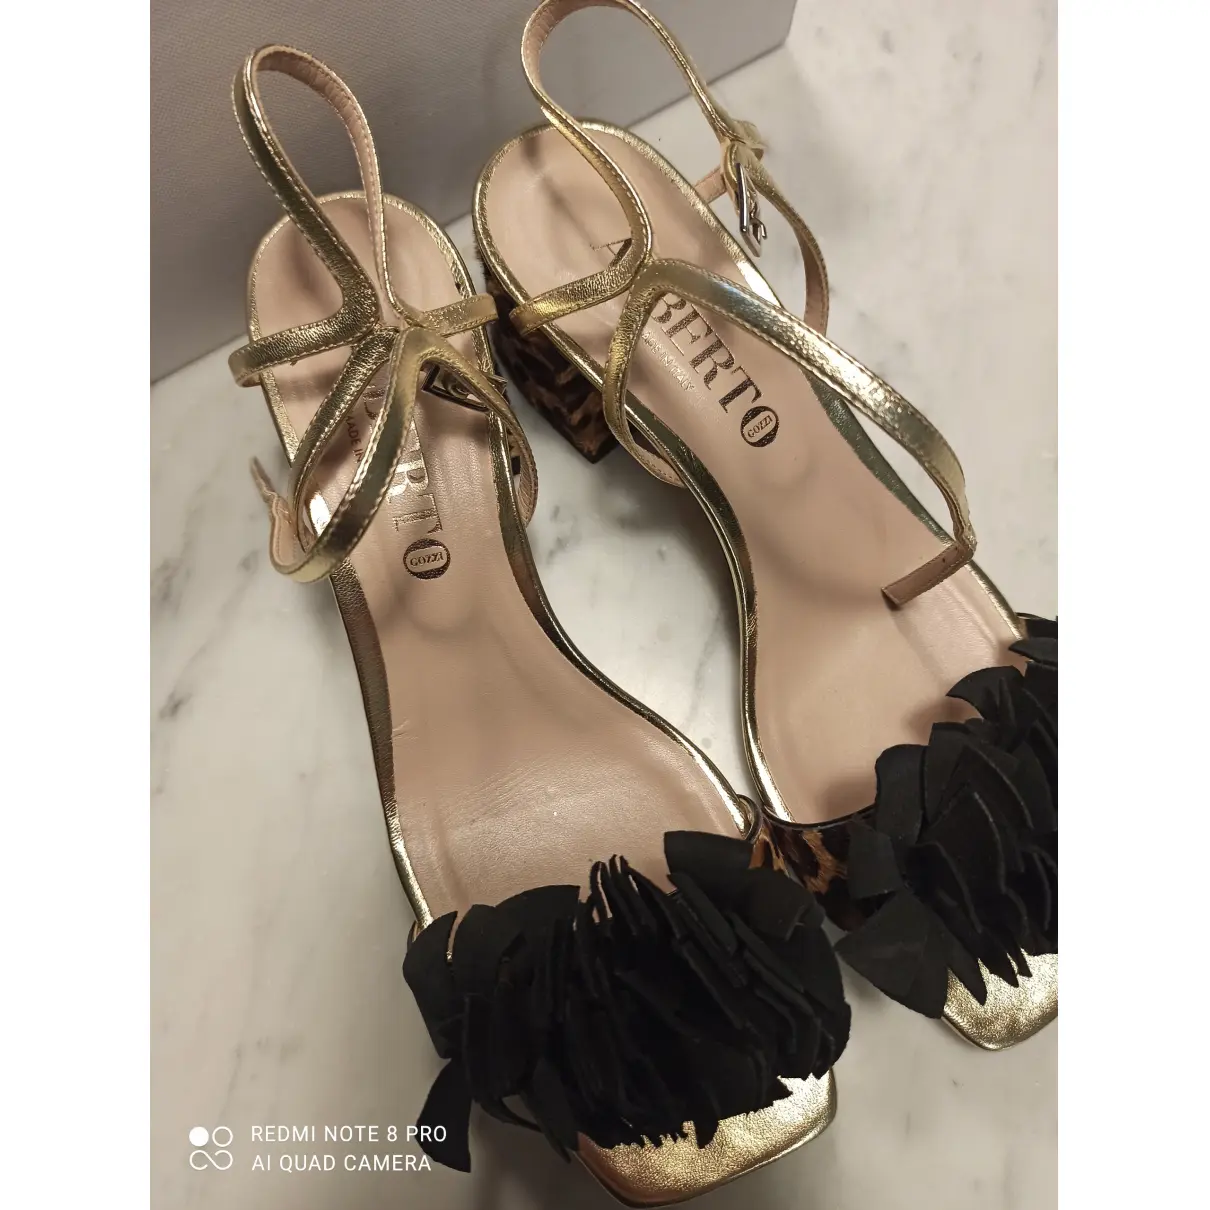 Luxury ALBERTO GOZZI Sandals Women